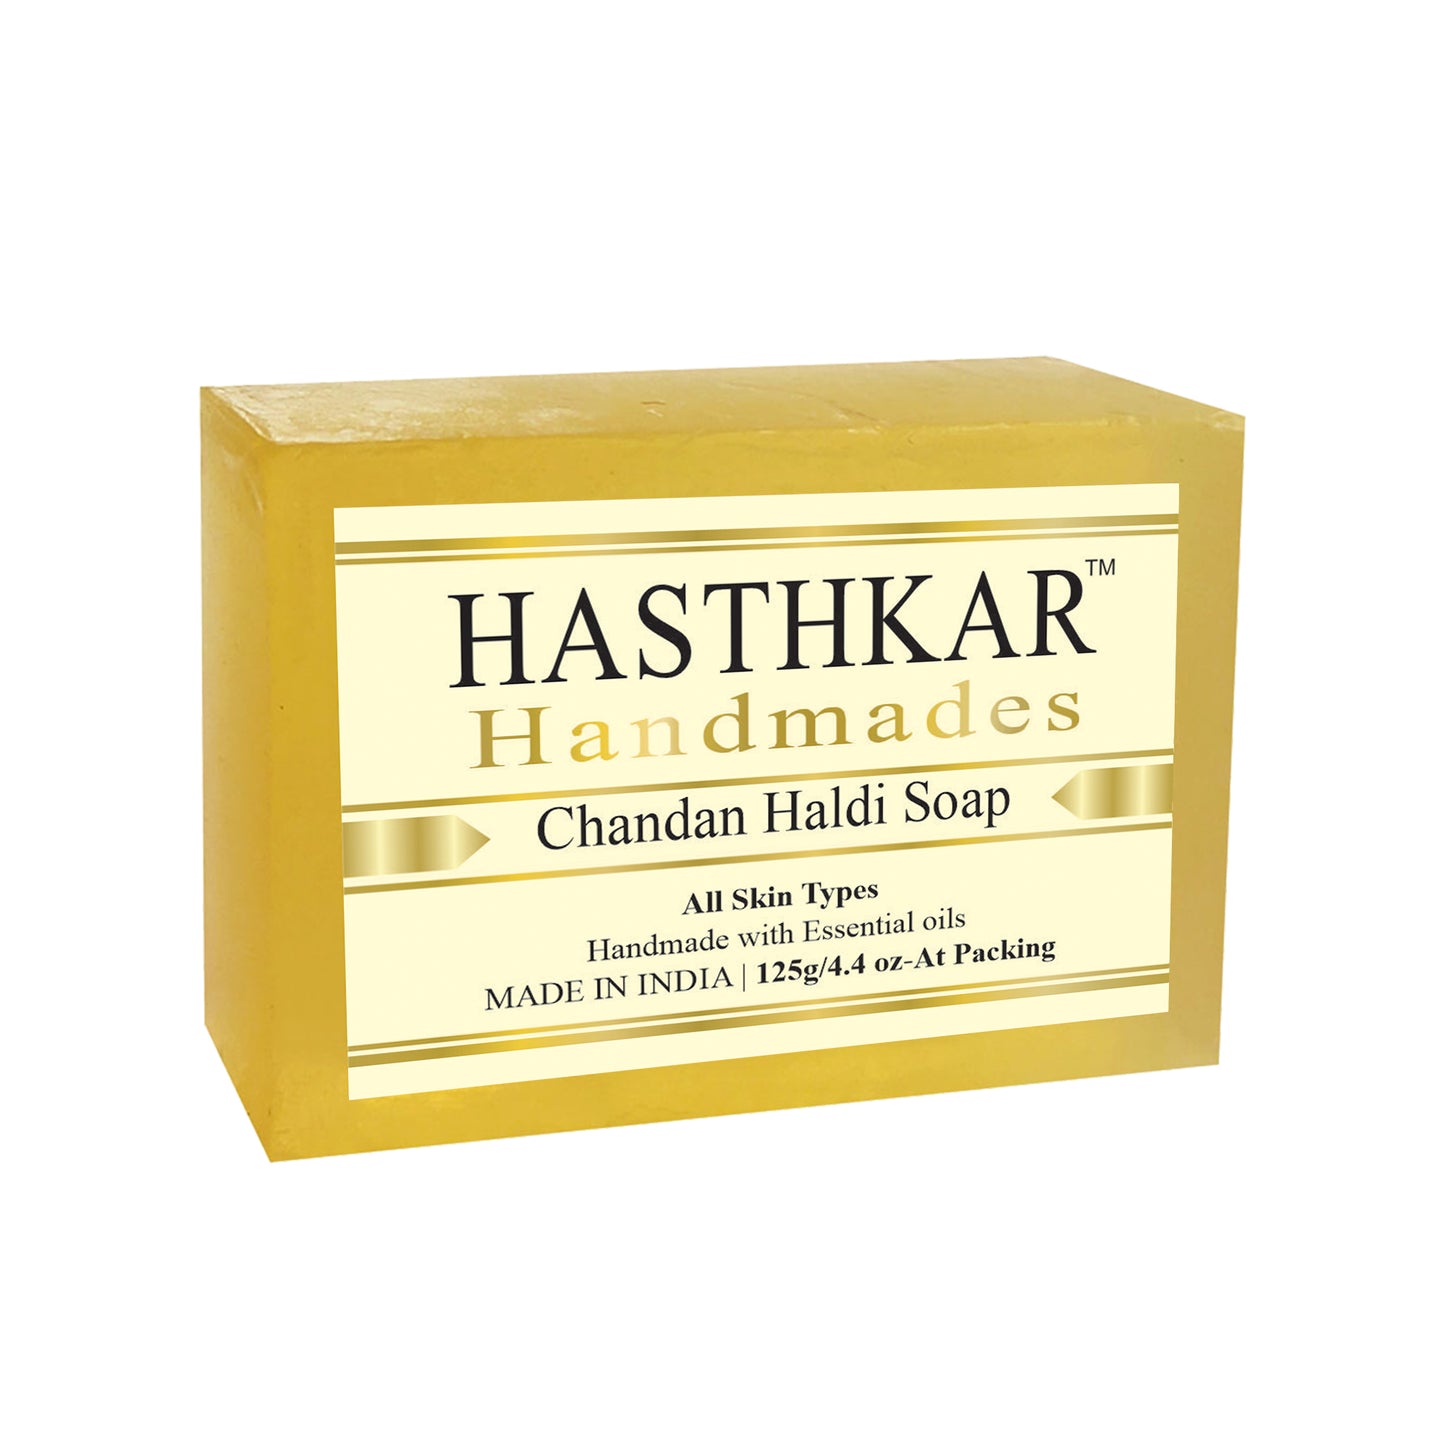 Hasthkar Handmades Glycerine Chandan haldi Soap 125gm Pack of 5